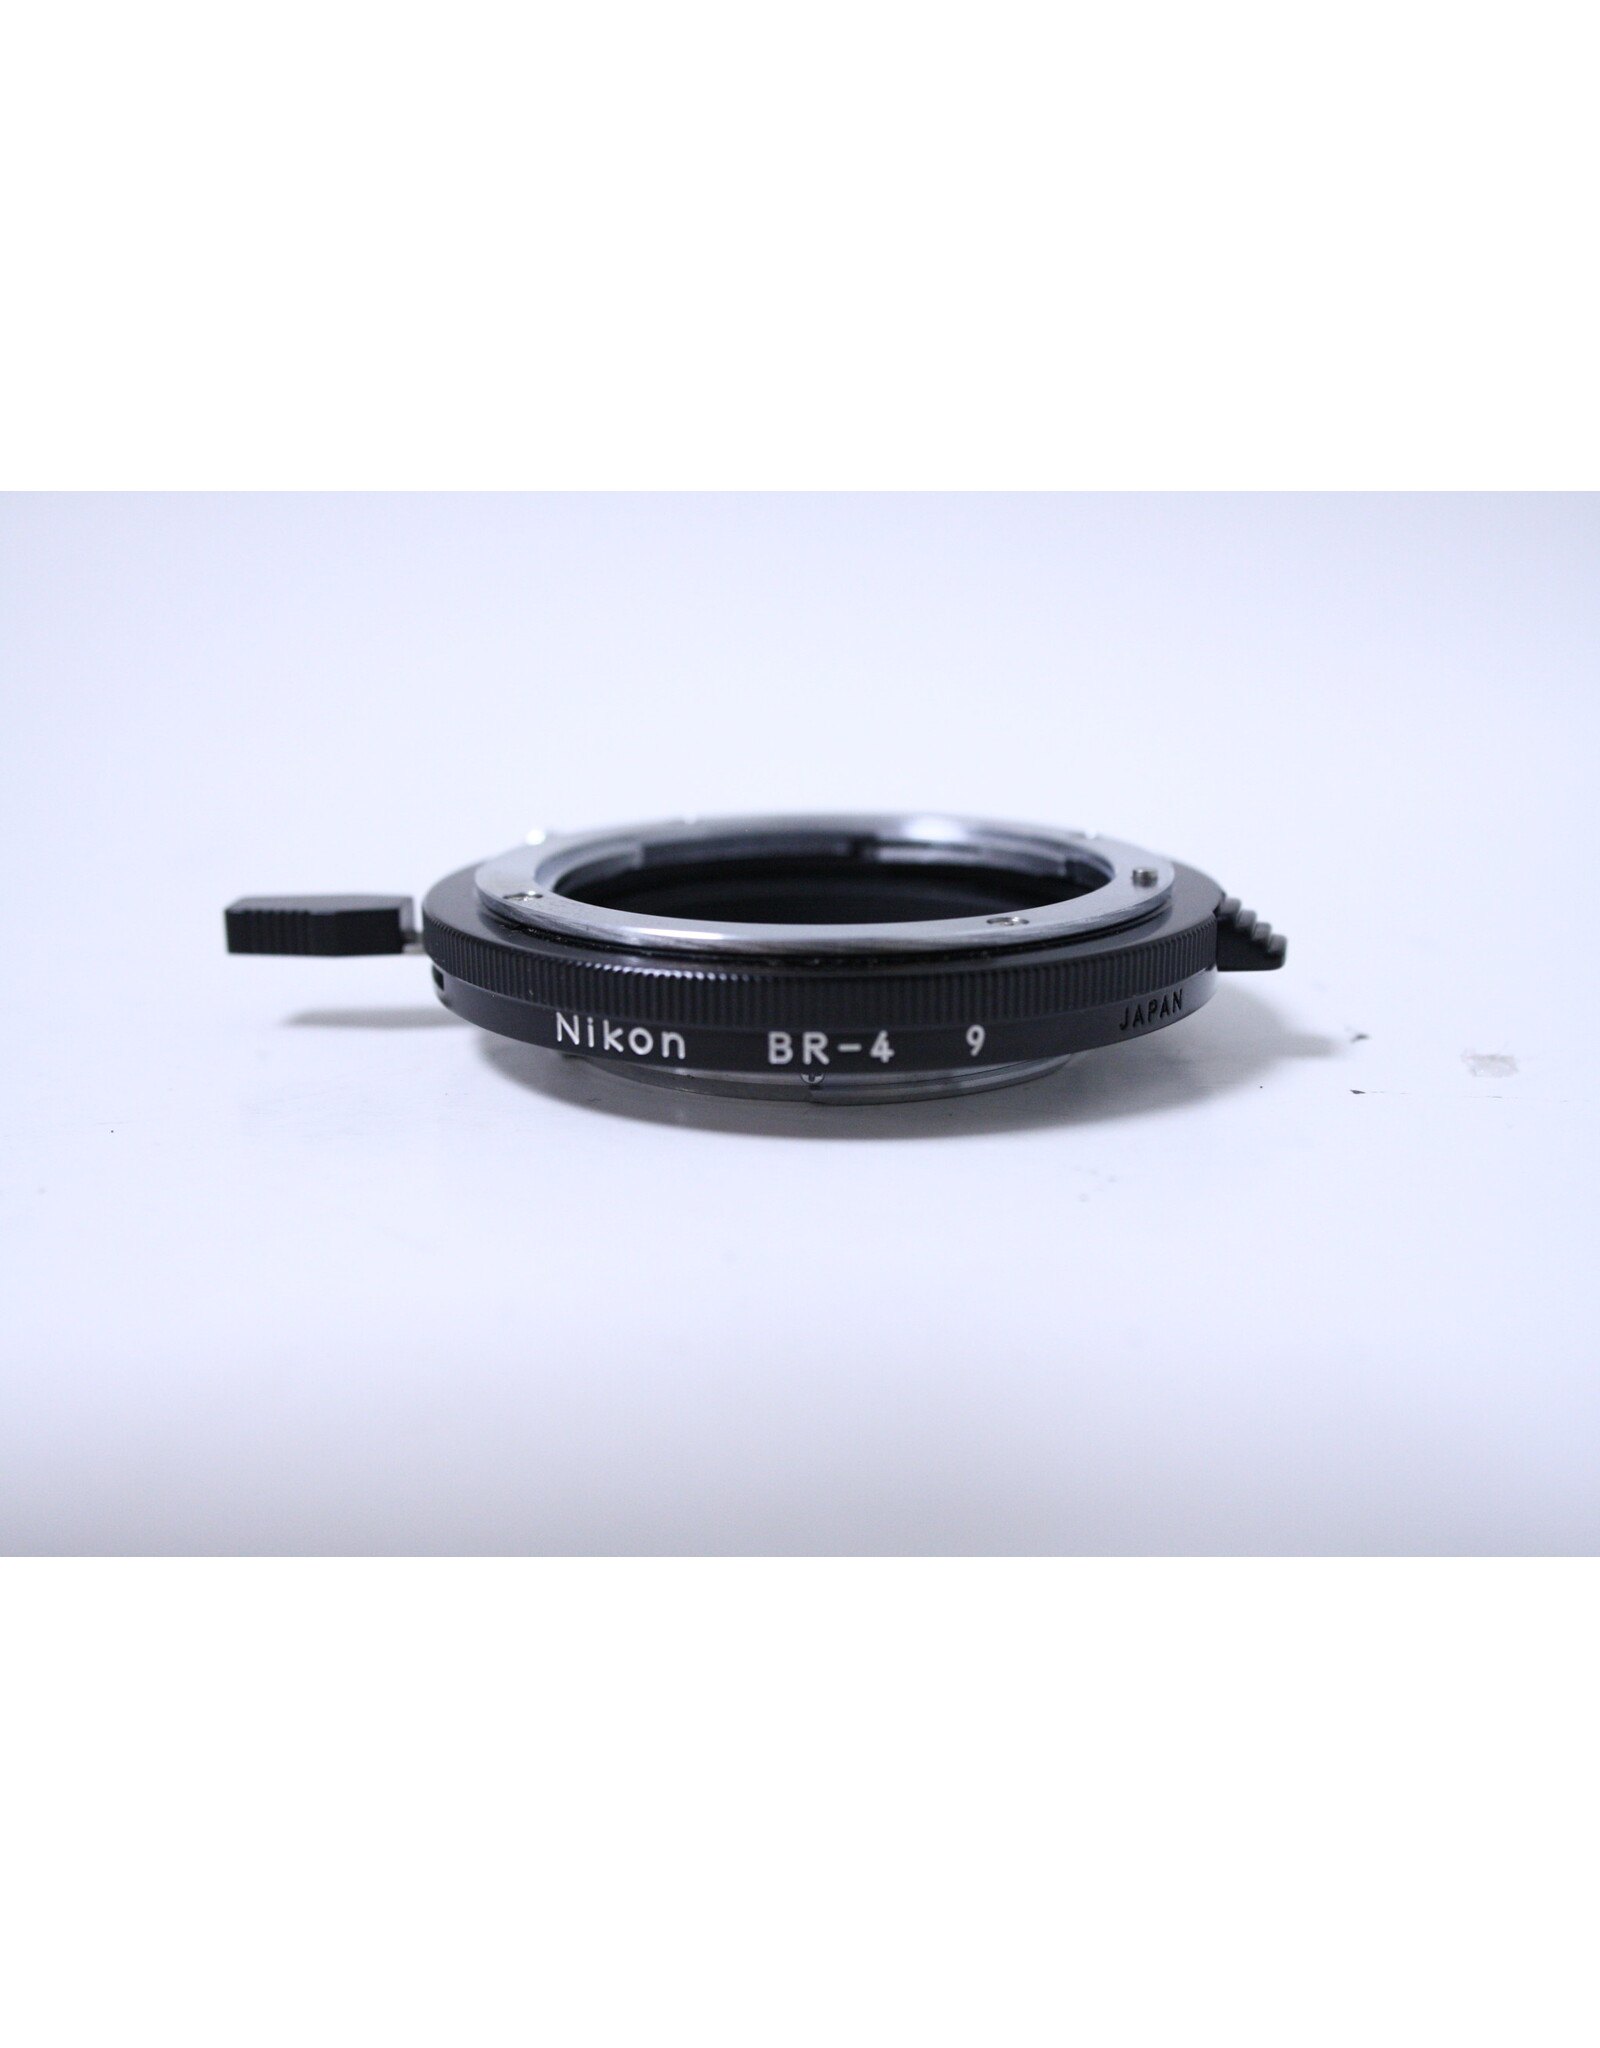 Nikon NIKON BR-4 auto double cable release ring for focusing bellows attachment